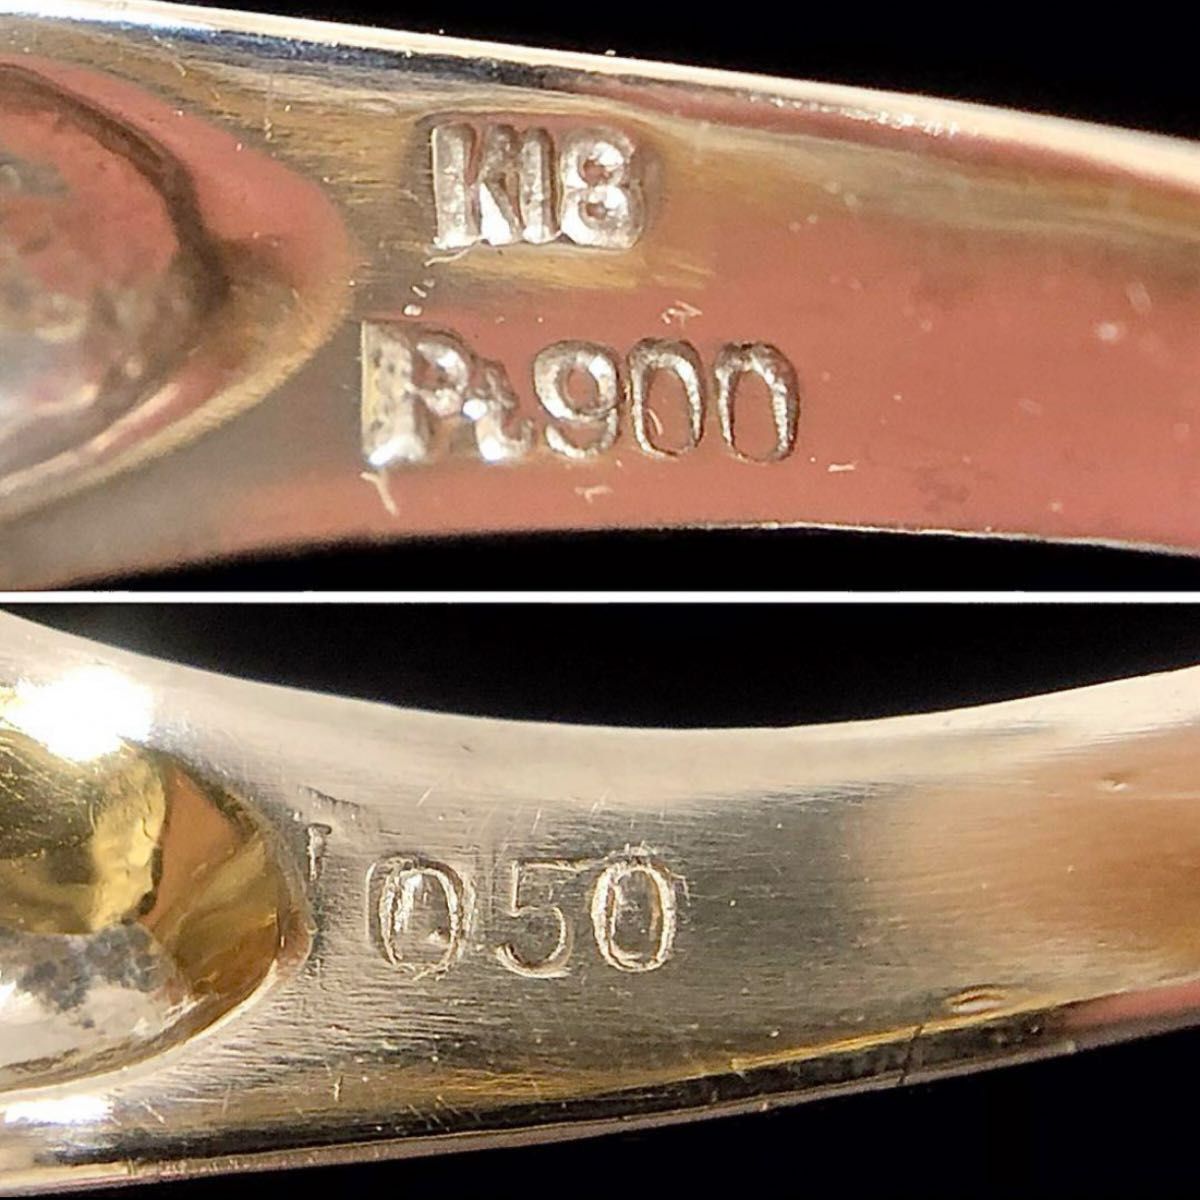 Pt900 K18 ダイヤモンド 0.50ct コンビ ダイヤ リング 指輪